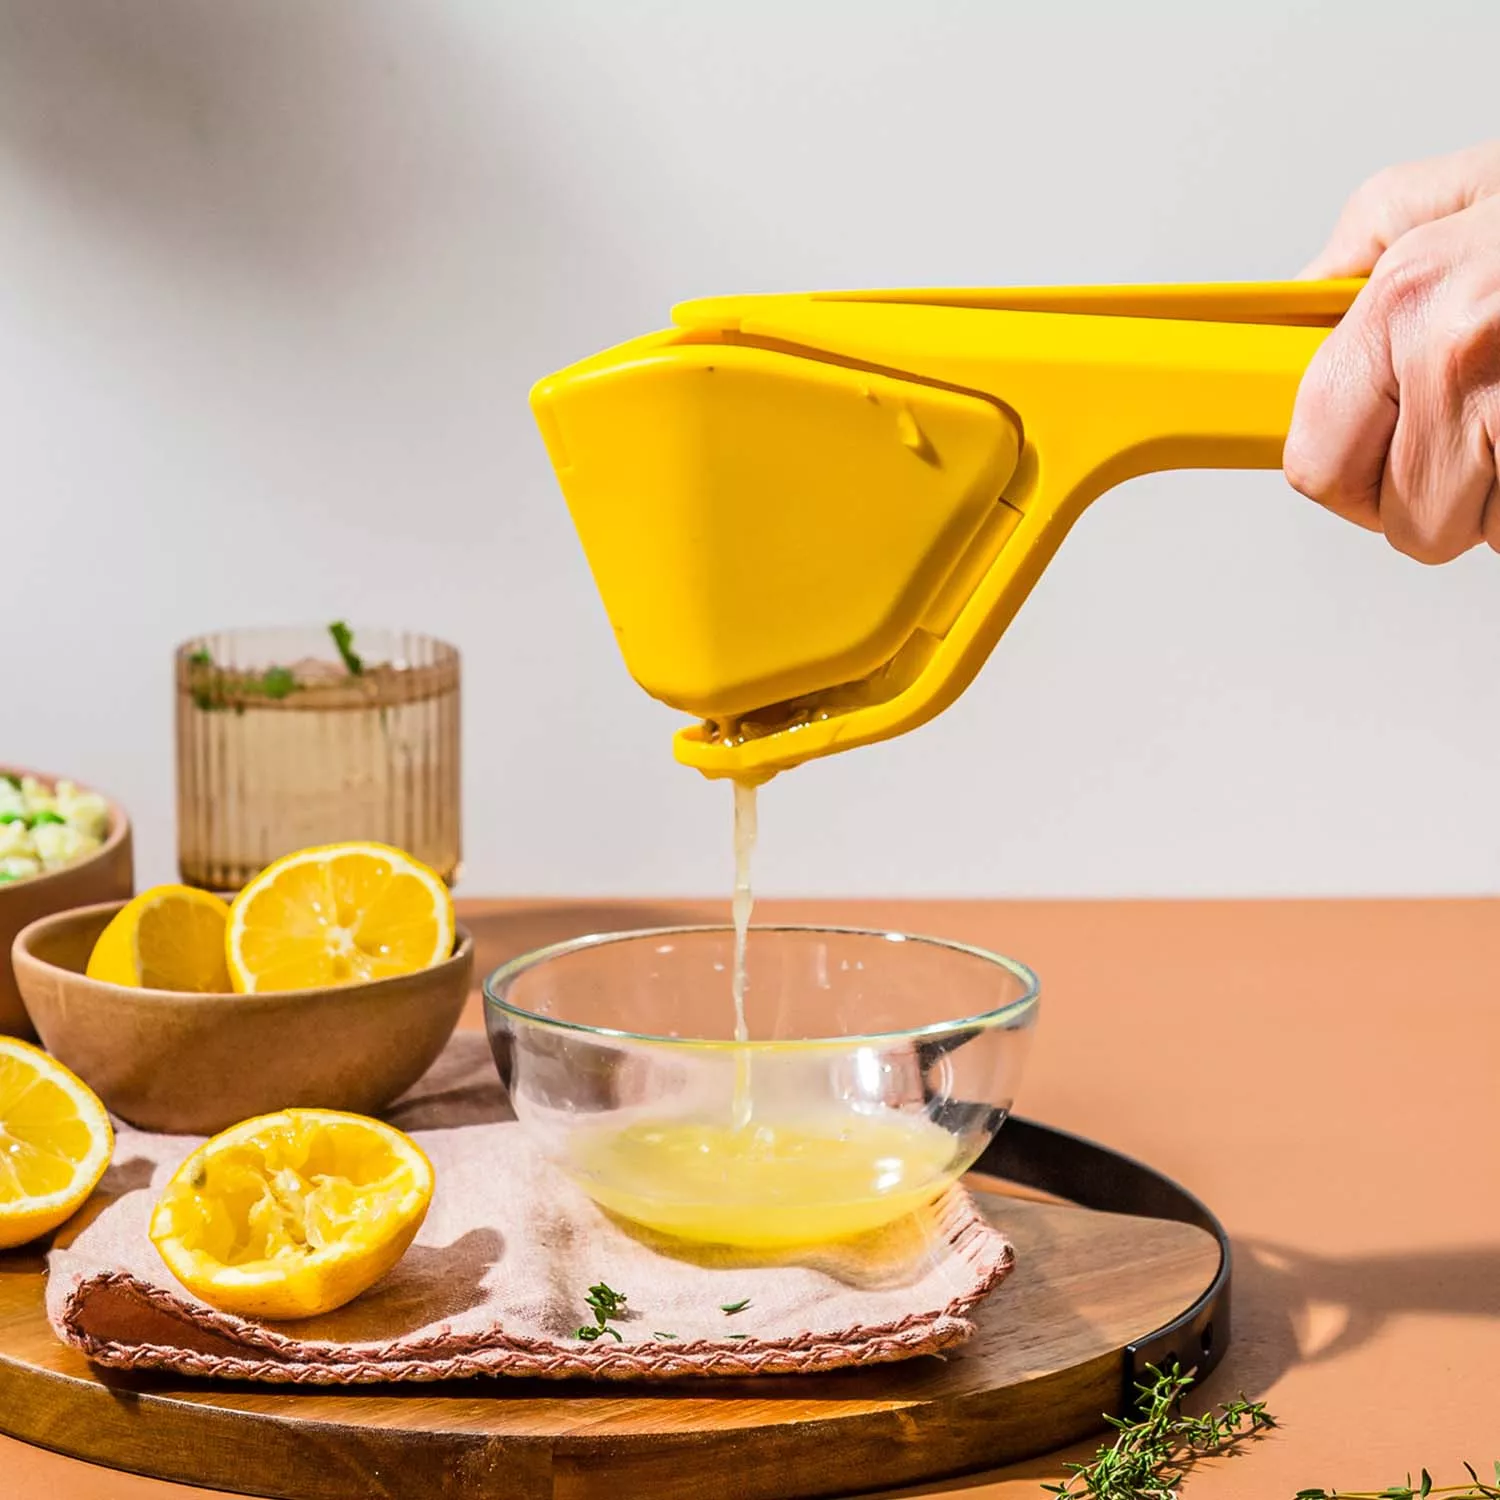 Dreamfarm Fluicer Lemon Juicer